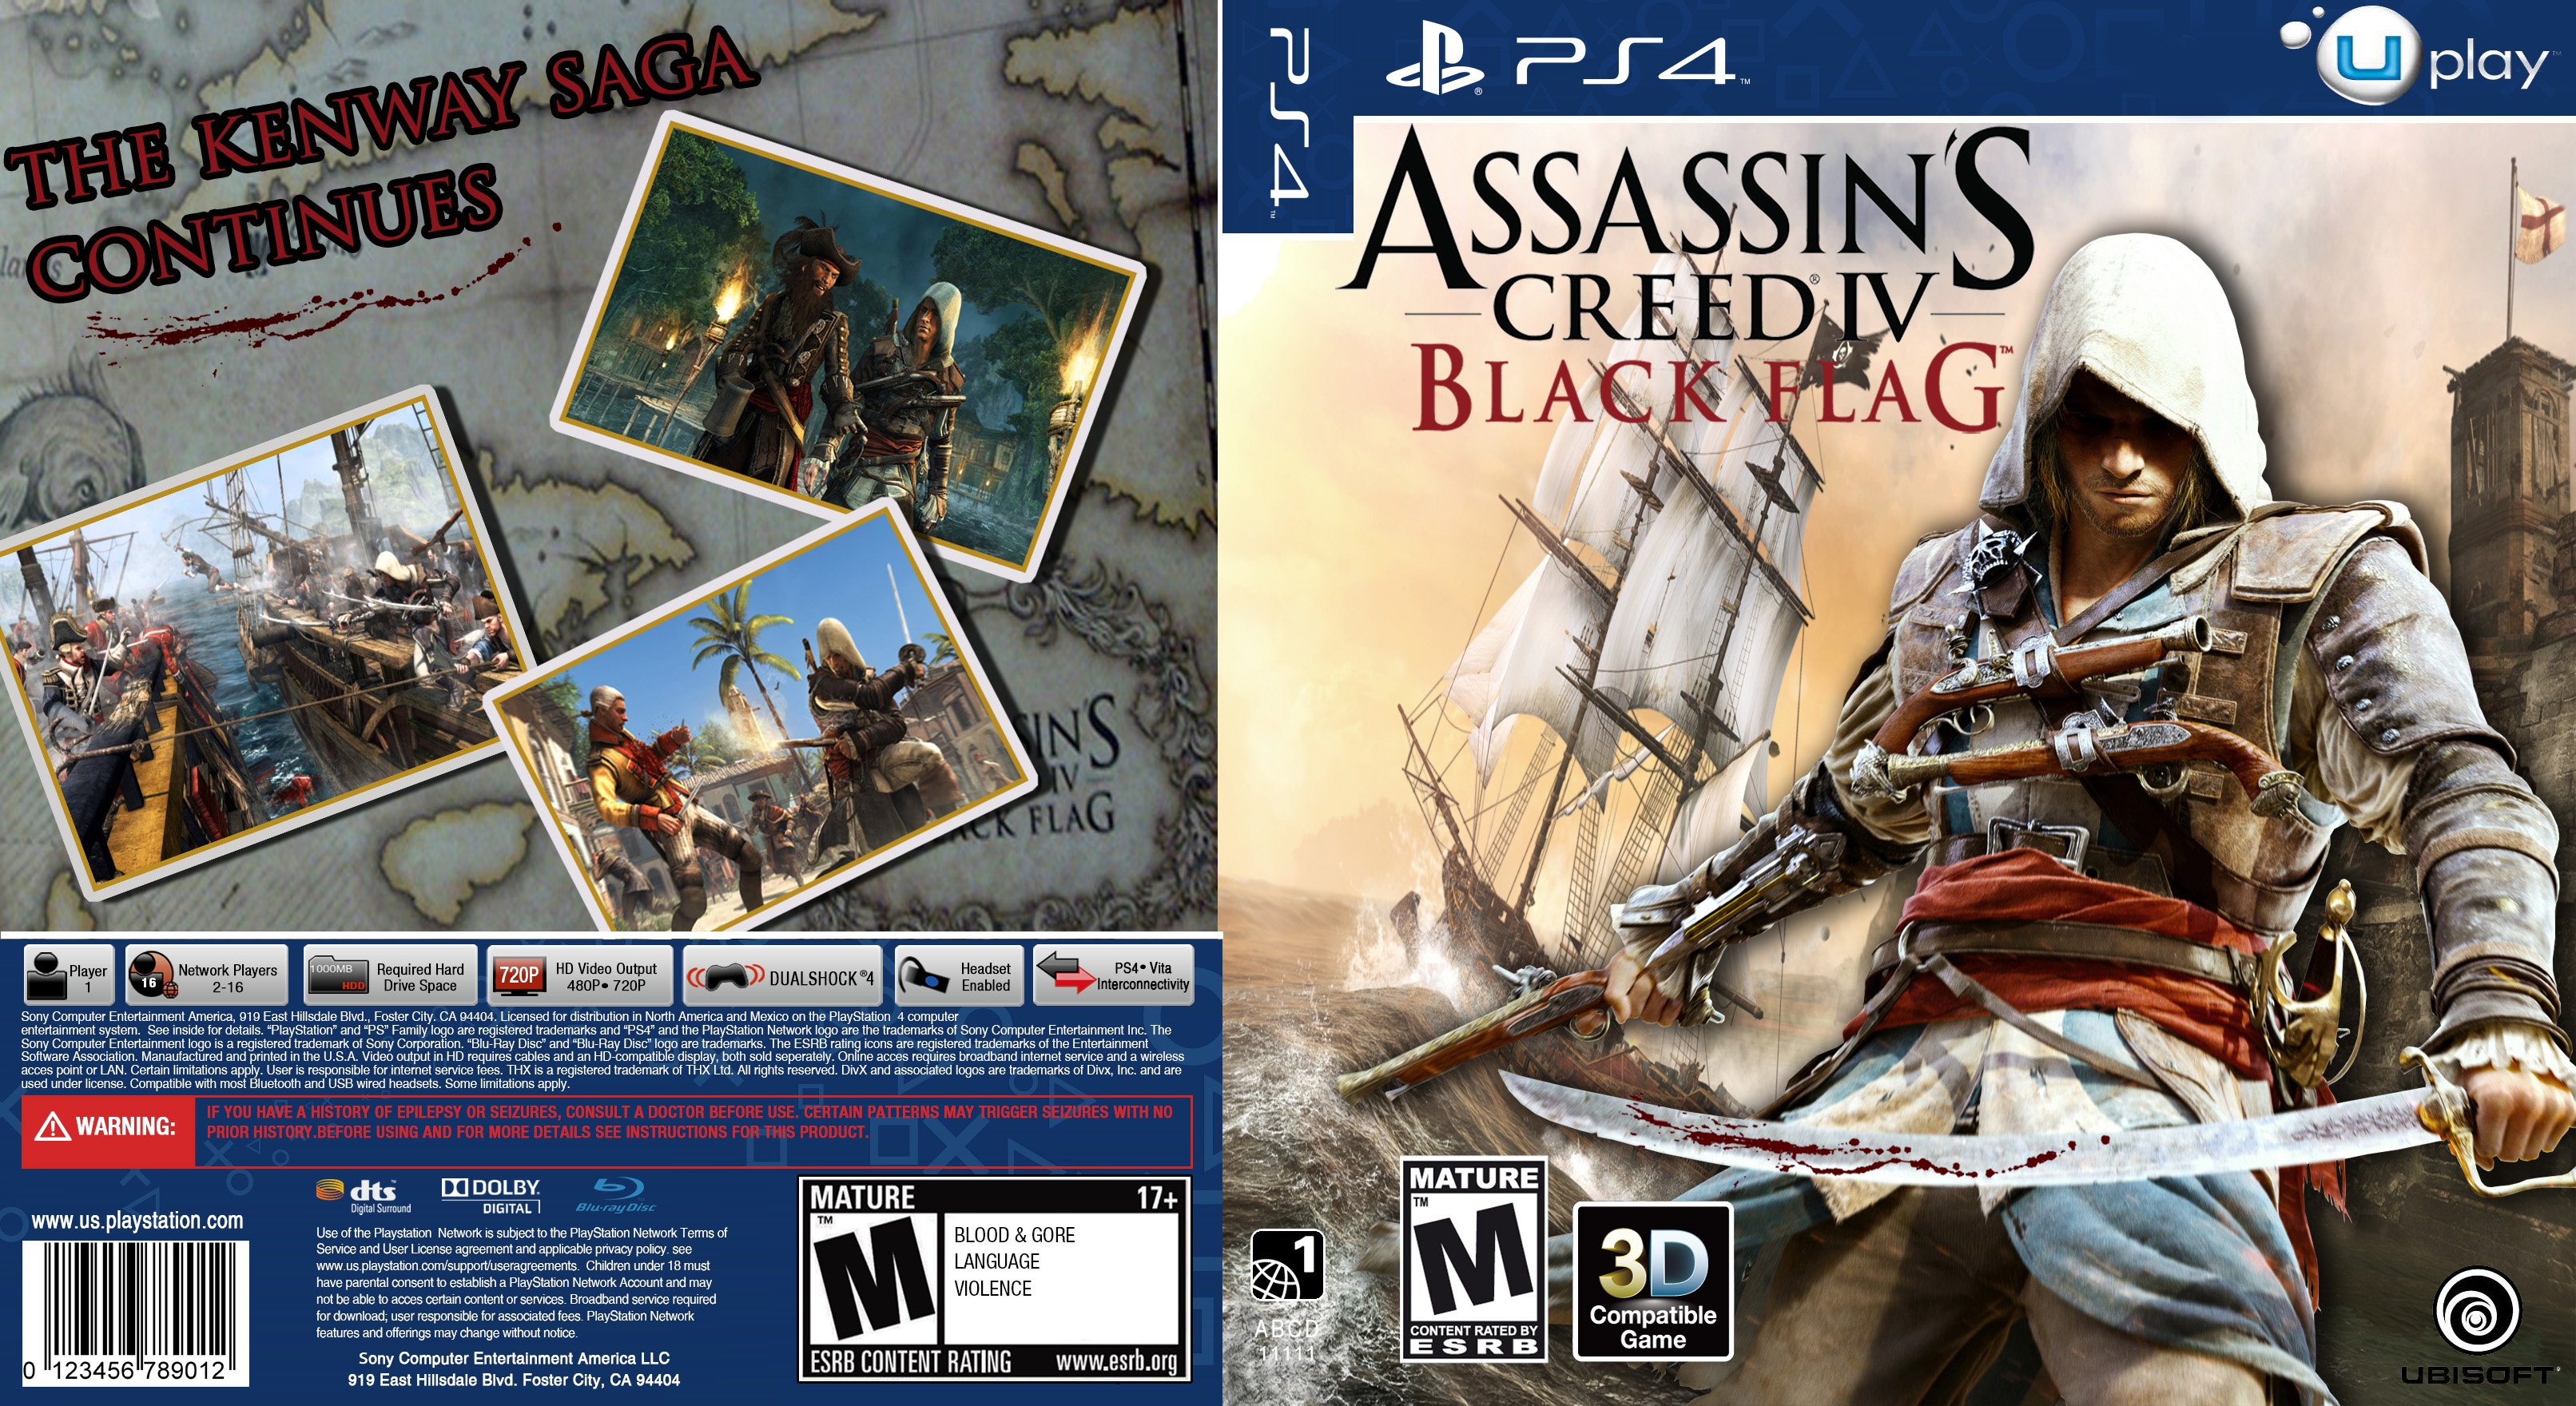 Assassins Creed IV: Black Flag box cover